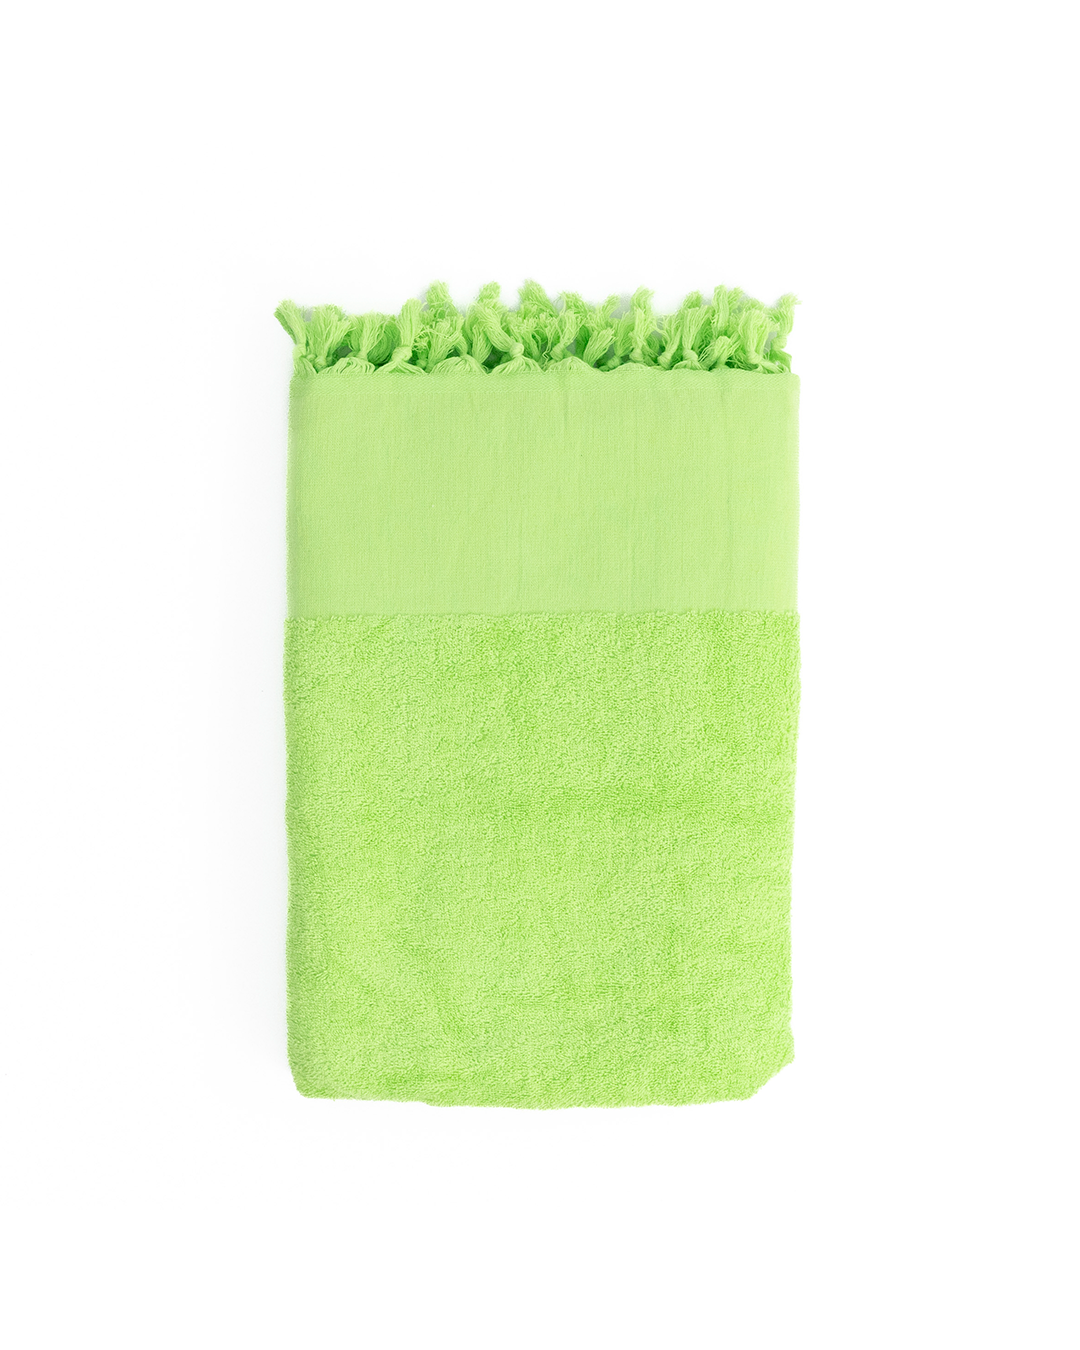 Beach Towel with Tassels